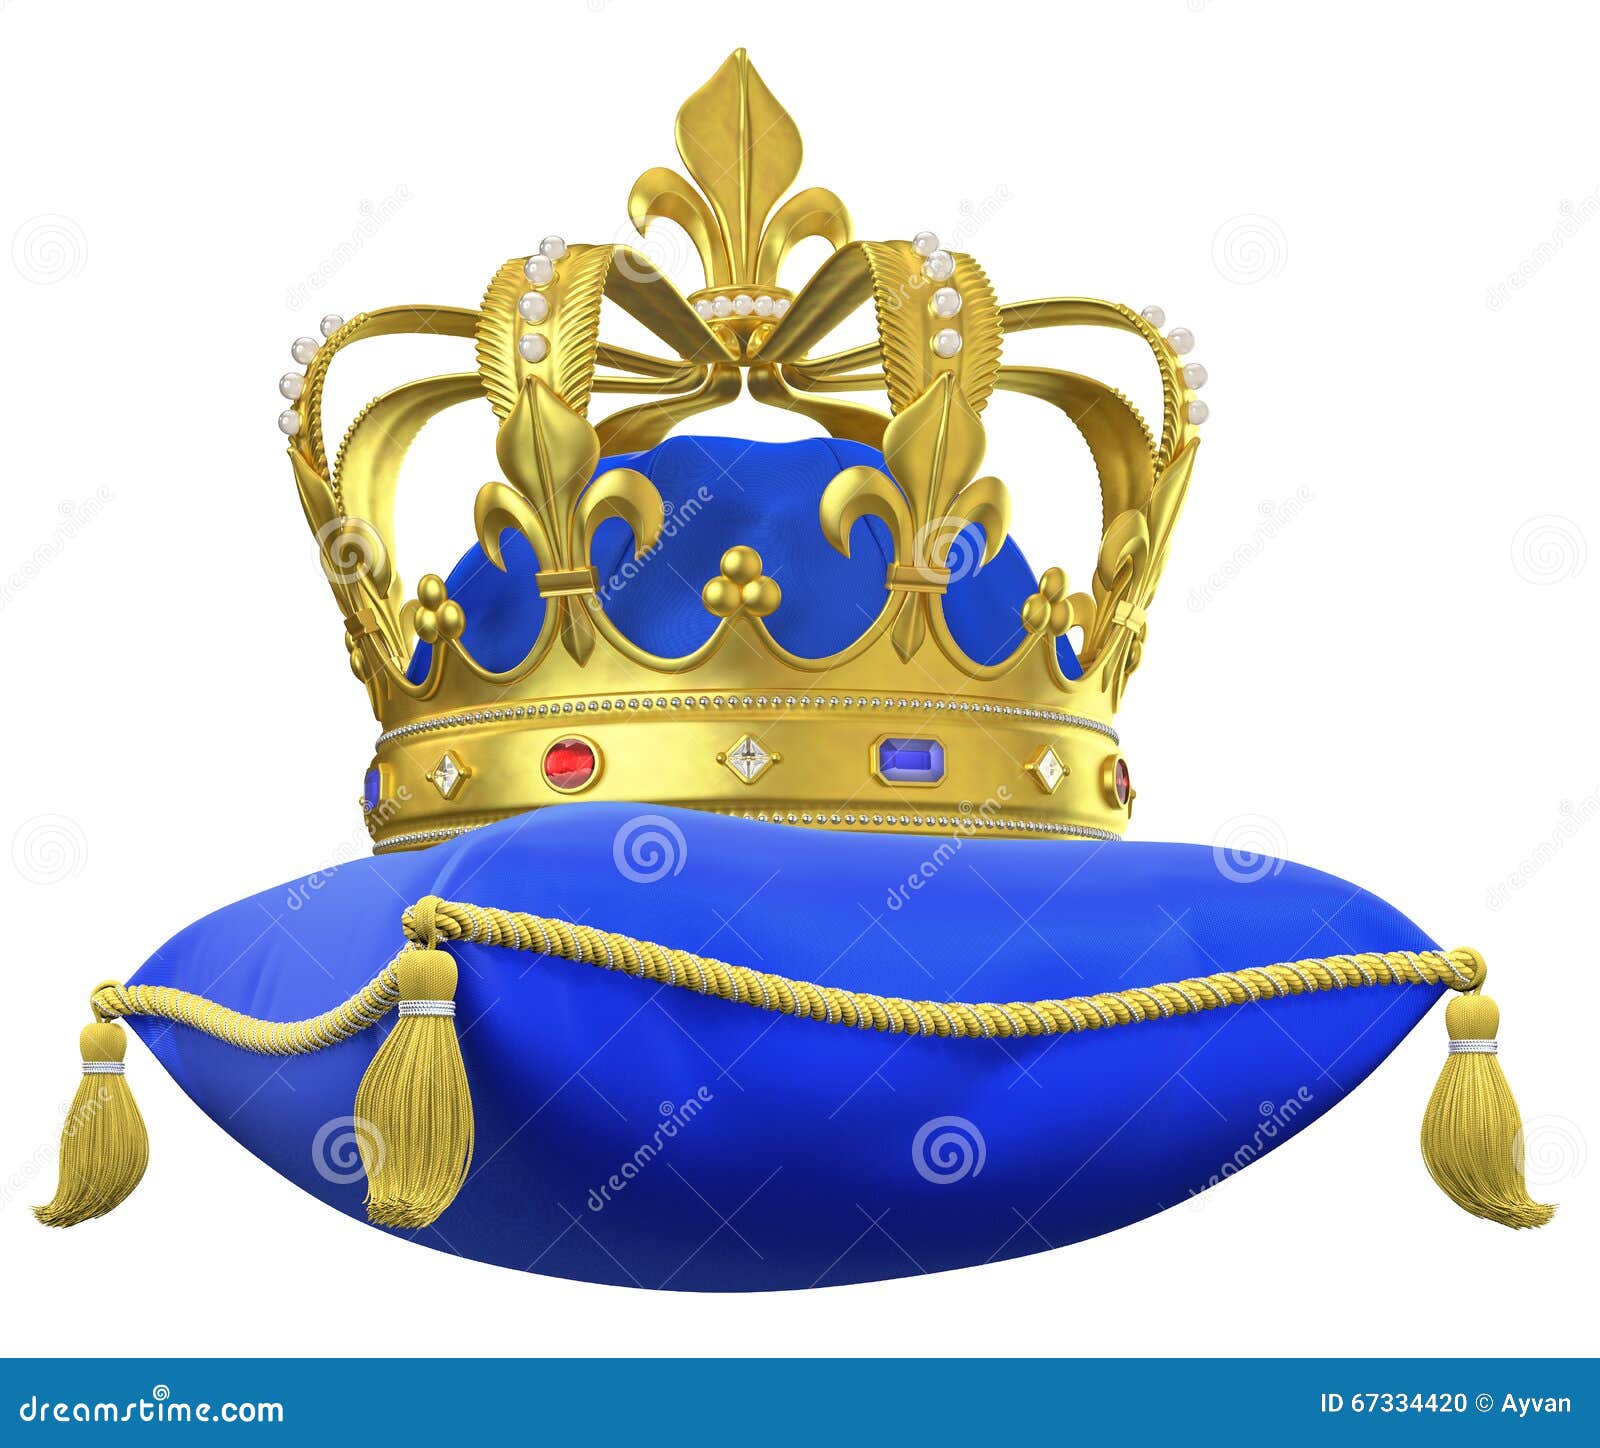 clip art royal crown - photo #28